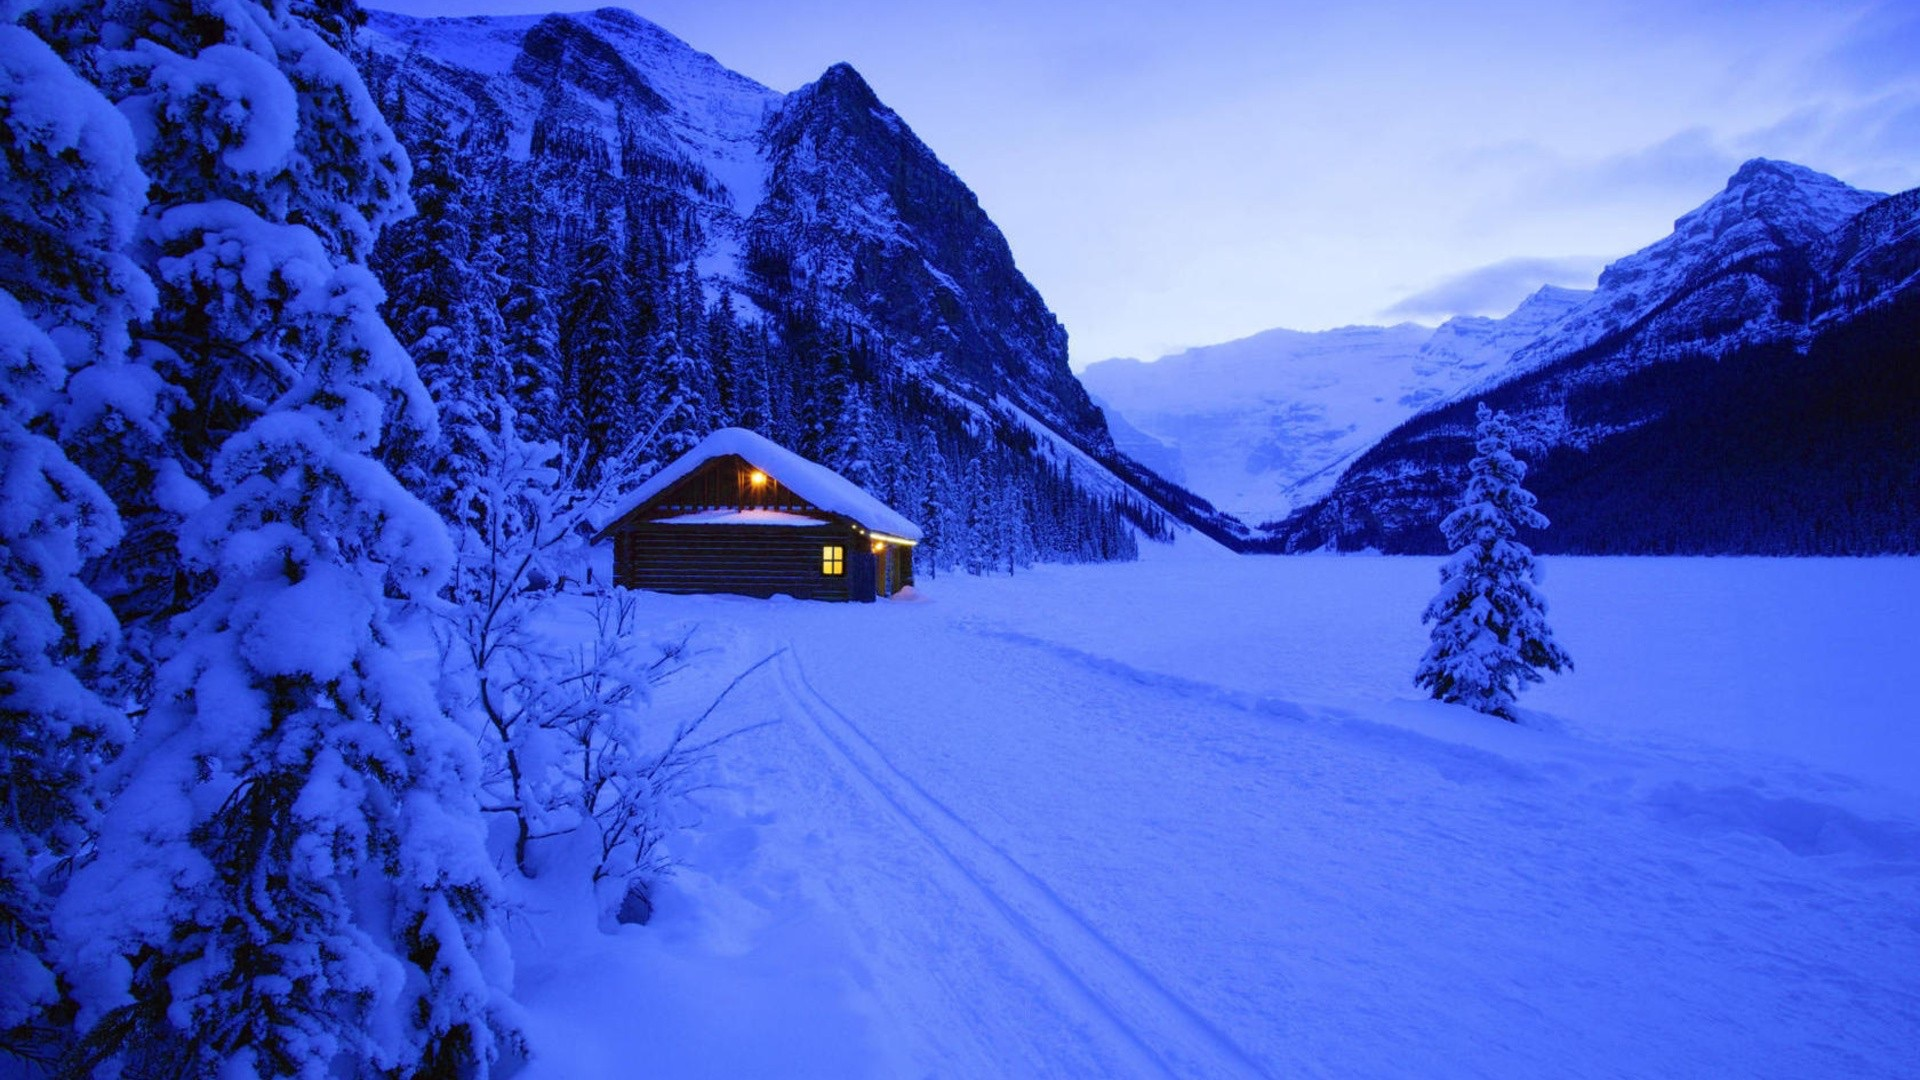 Cozy cabin in the snow